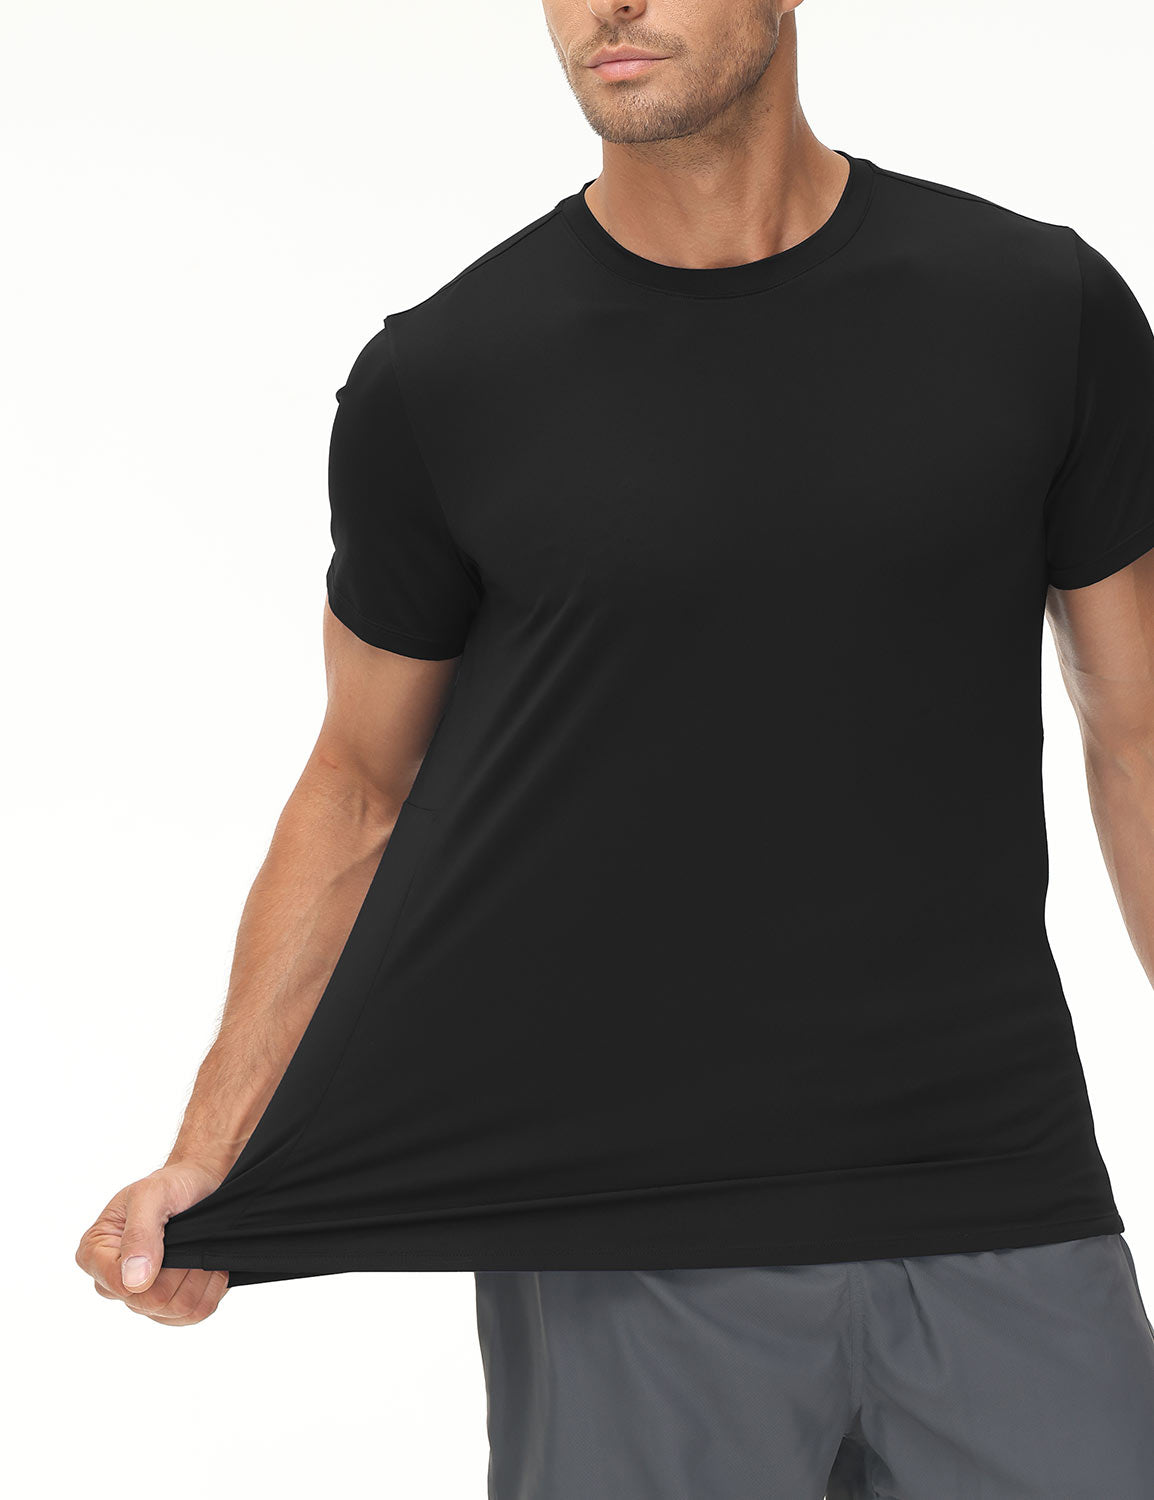 Baleaf Men's Fitted Crew Neck Short Sleeve T-shirts Anthracite Details